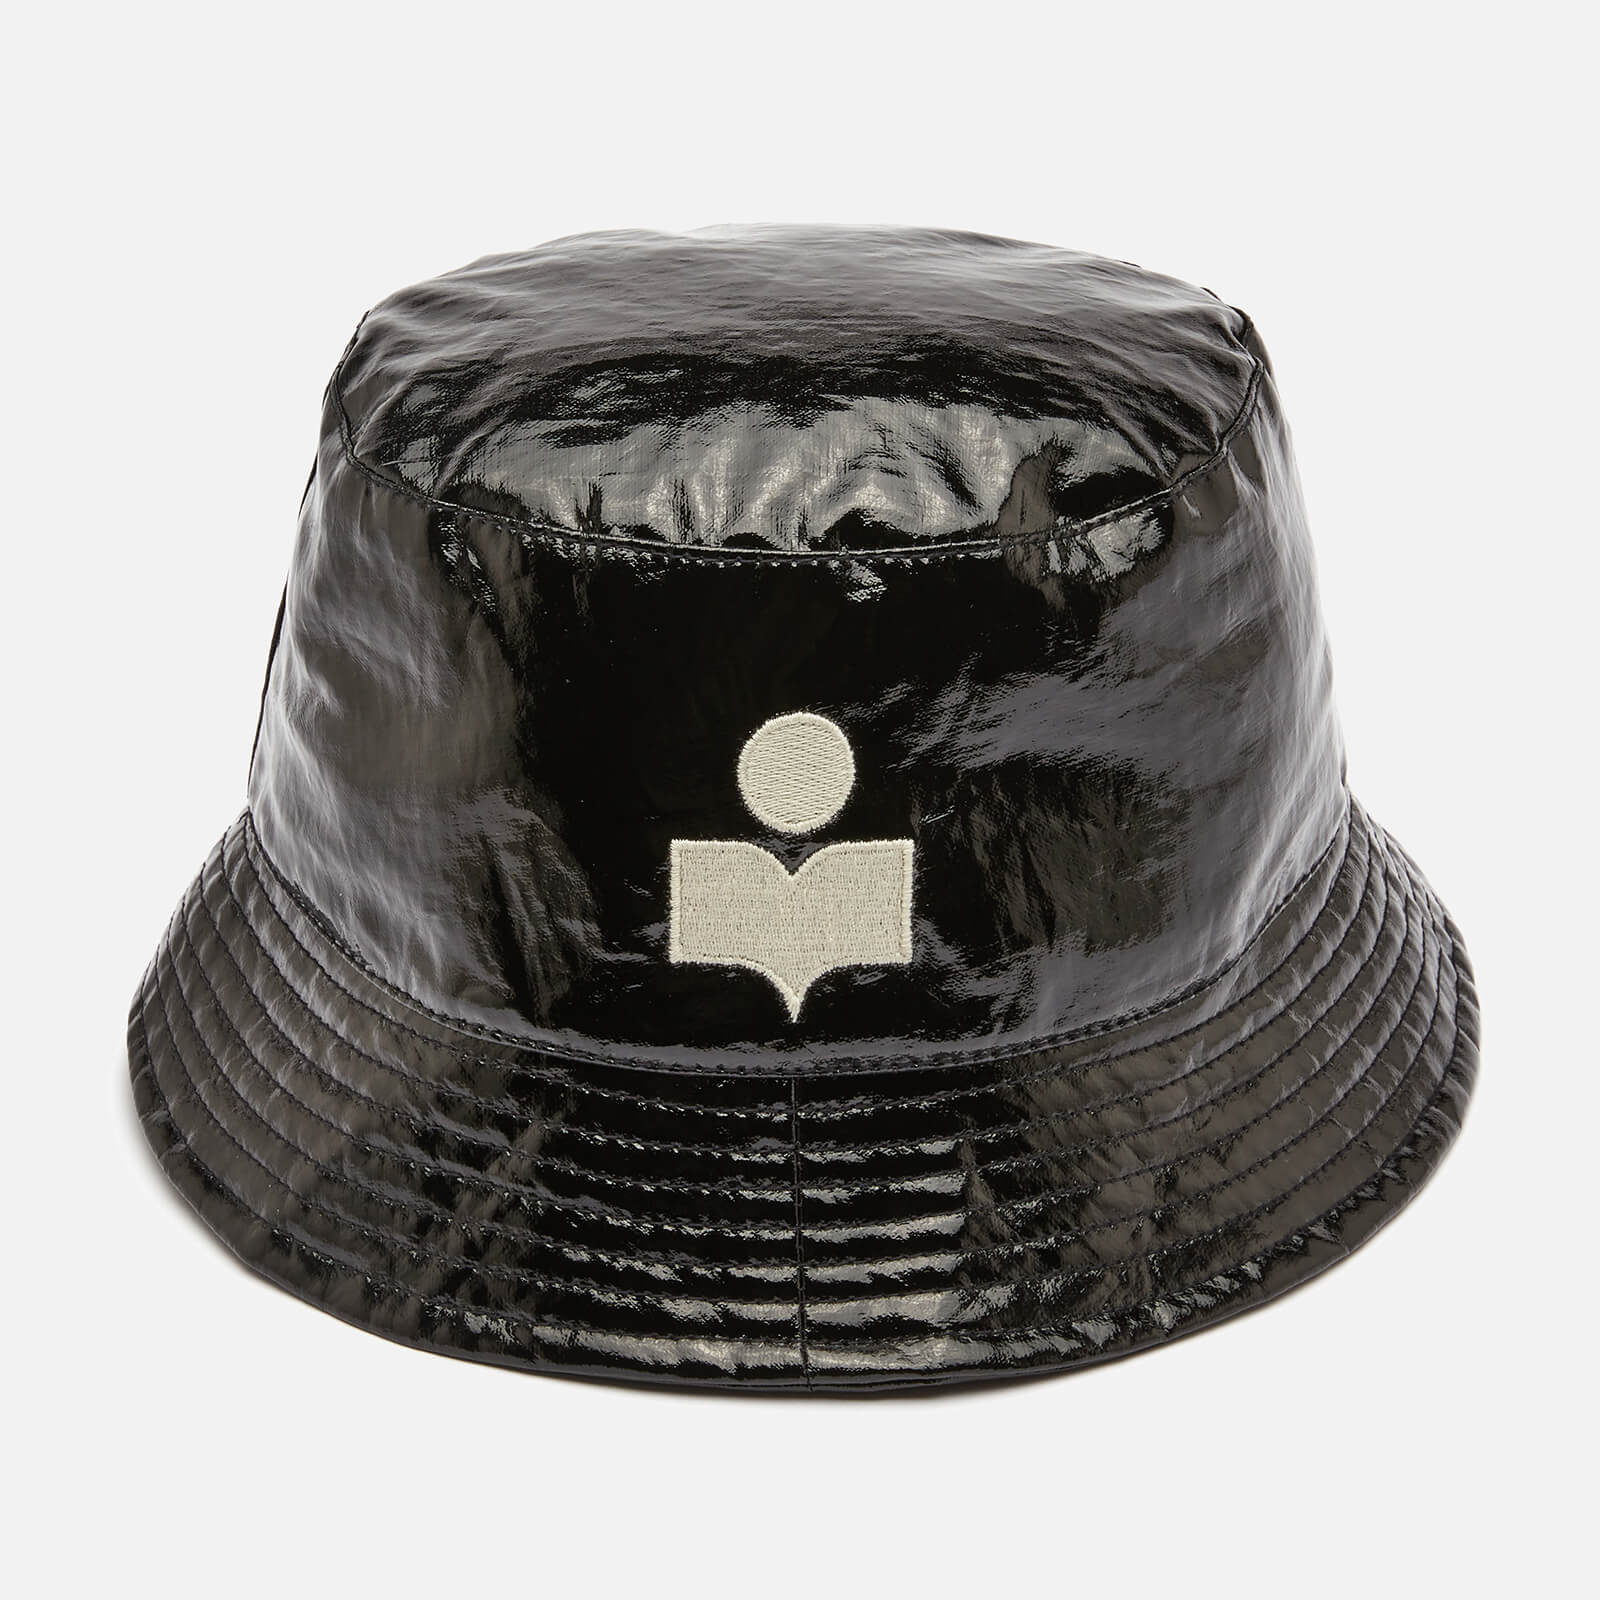 Isabel Marant Women's Haley Bucket Hat - Black - 56